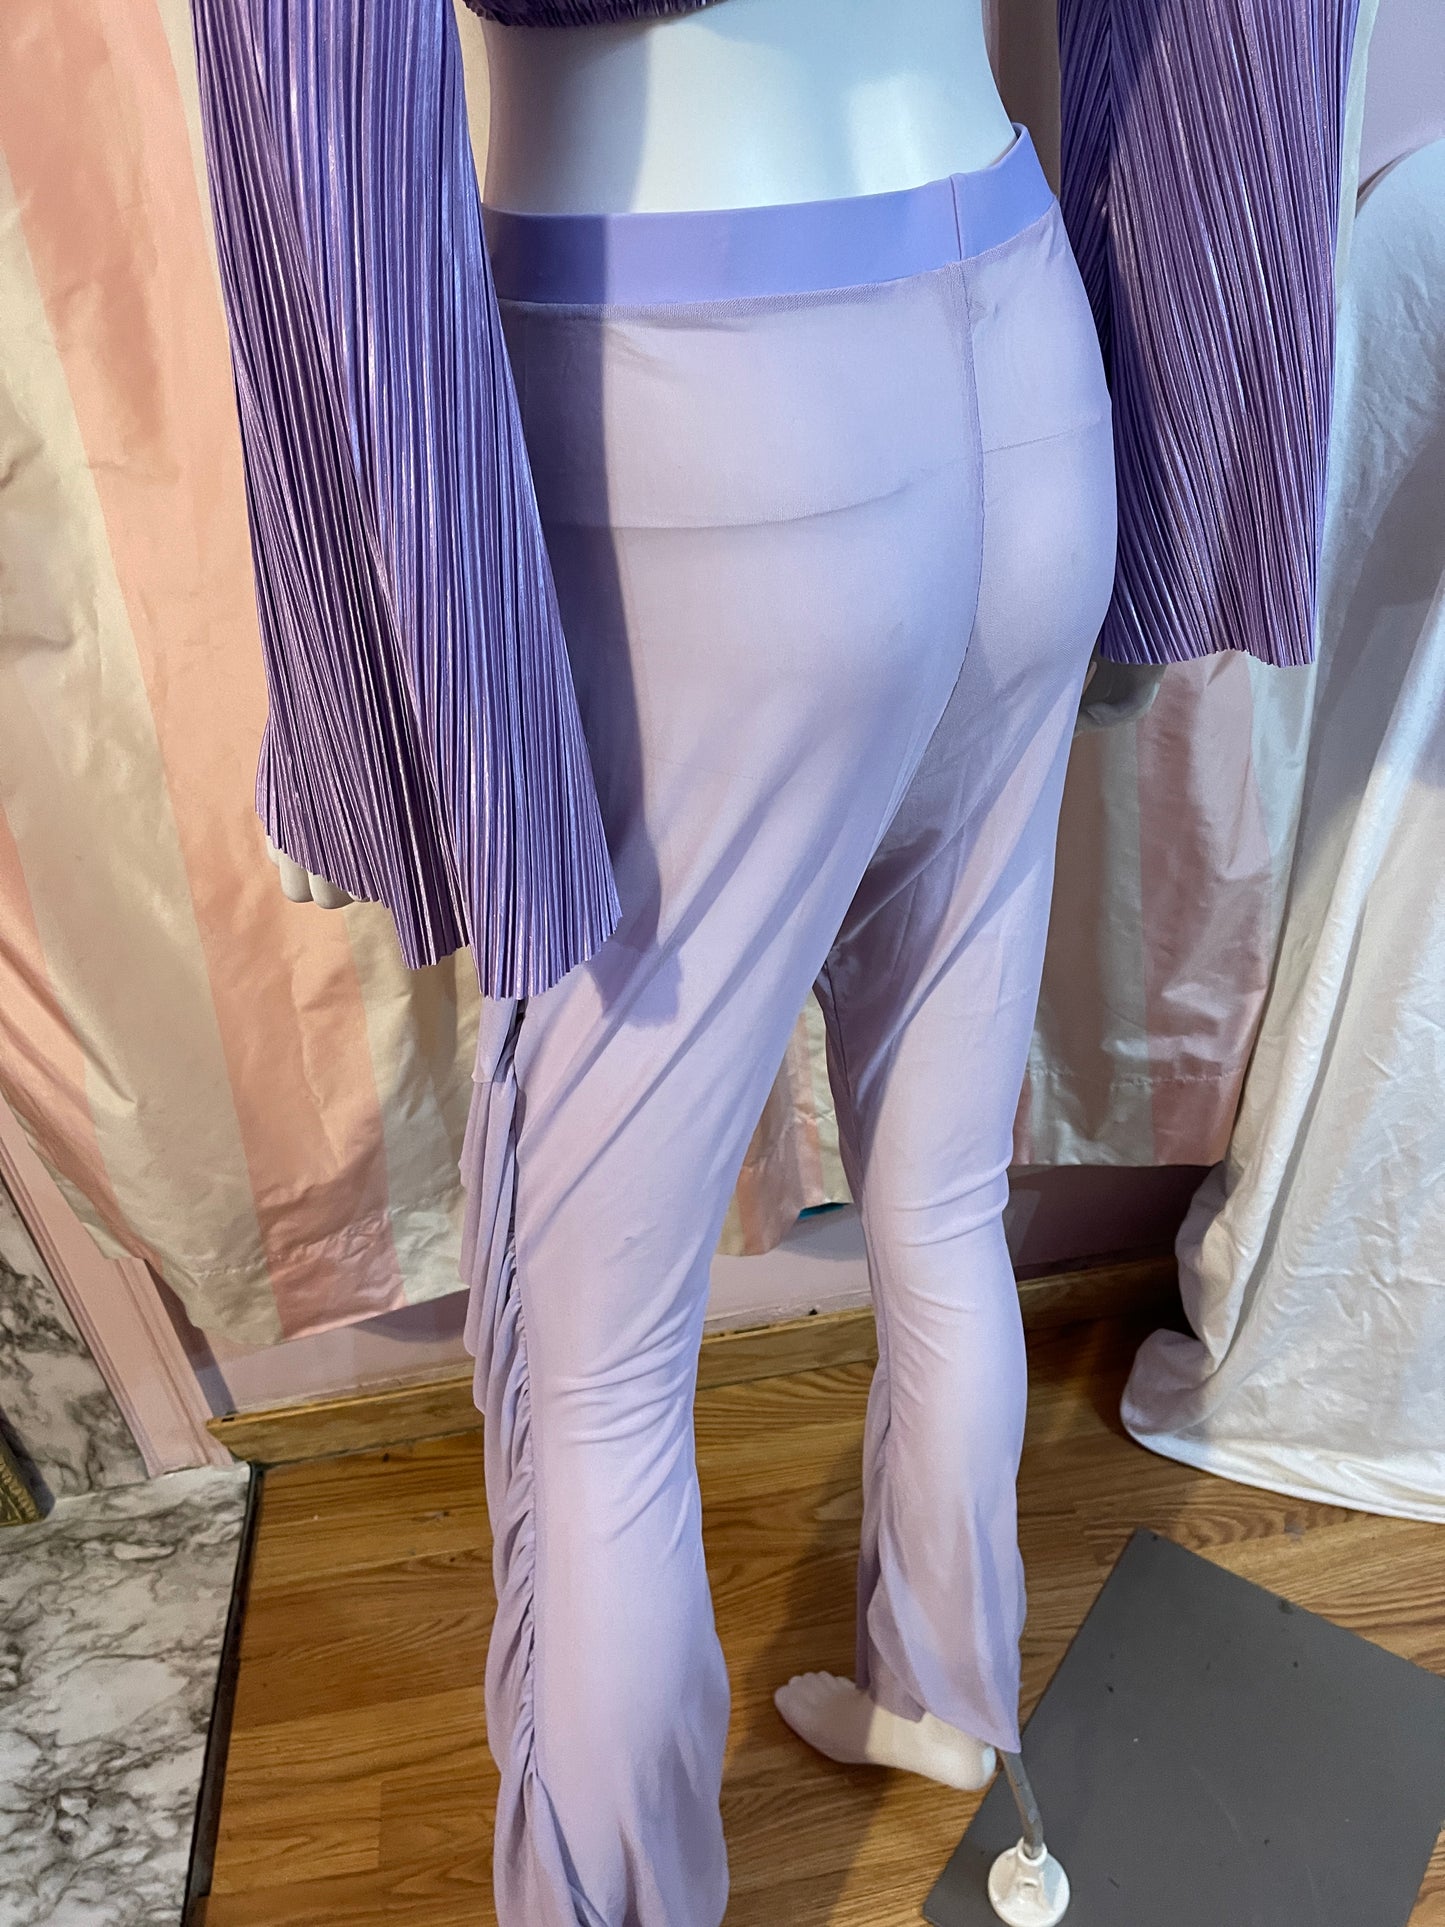 Purple Bolero midriff top with sheer pants